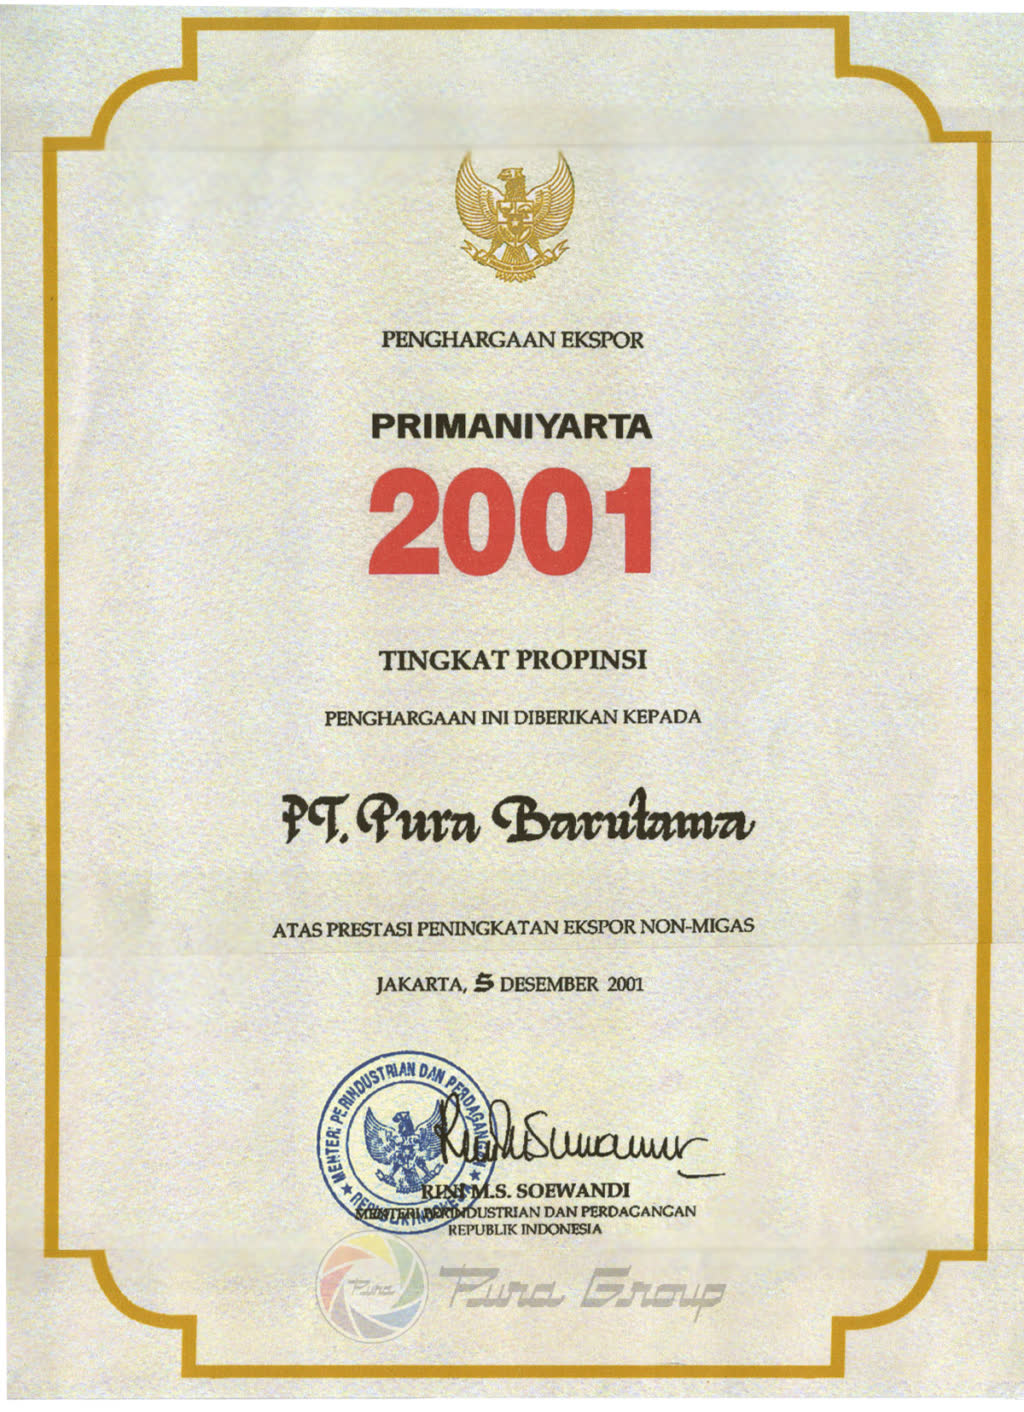 PRIMANIYARTA 2001